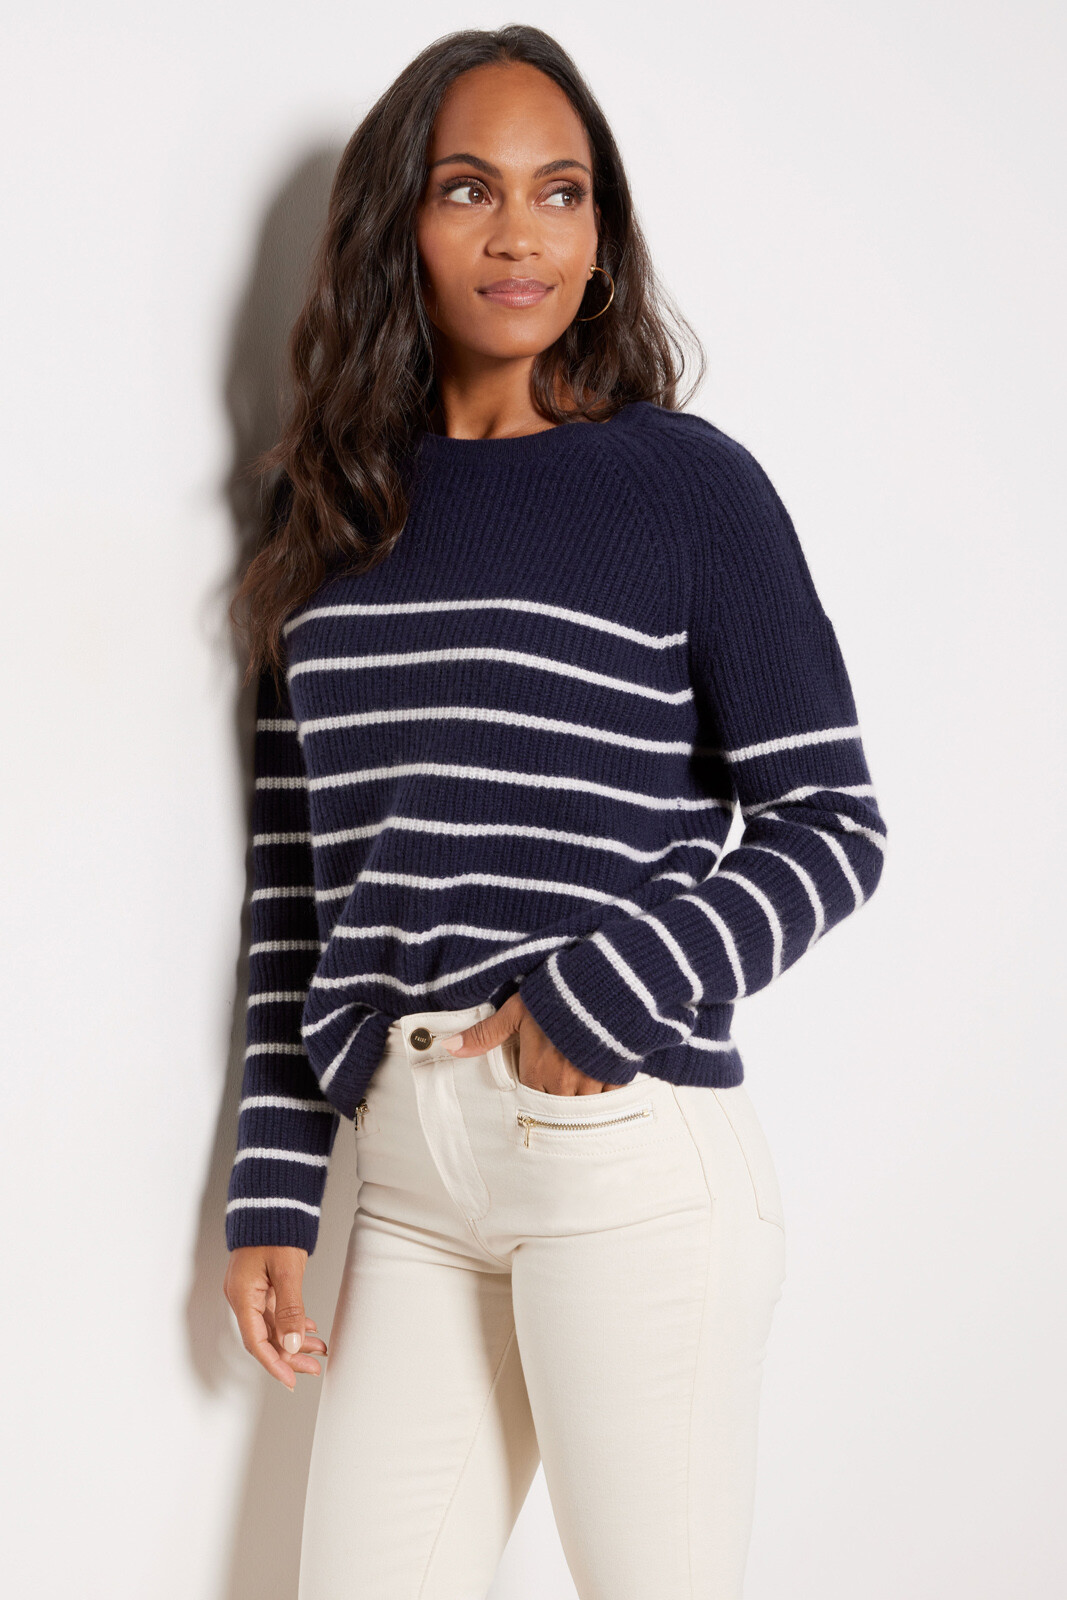 EVEREVE Campbell Cashmere Stripe Pullover | EVEREVE